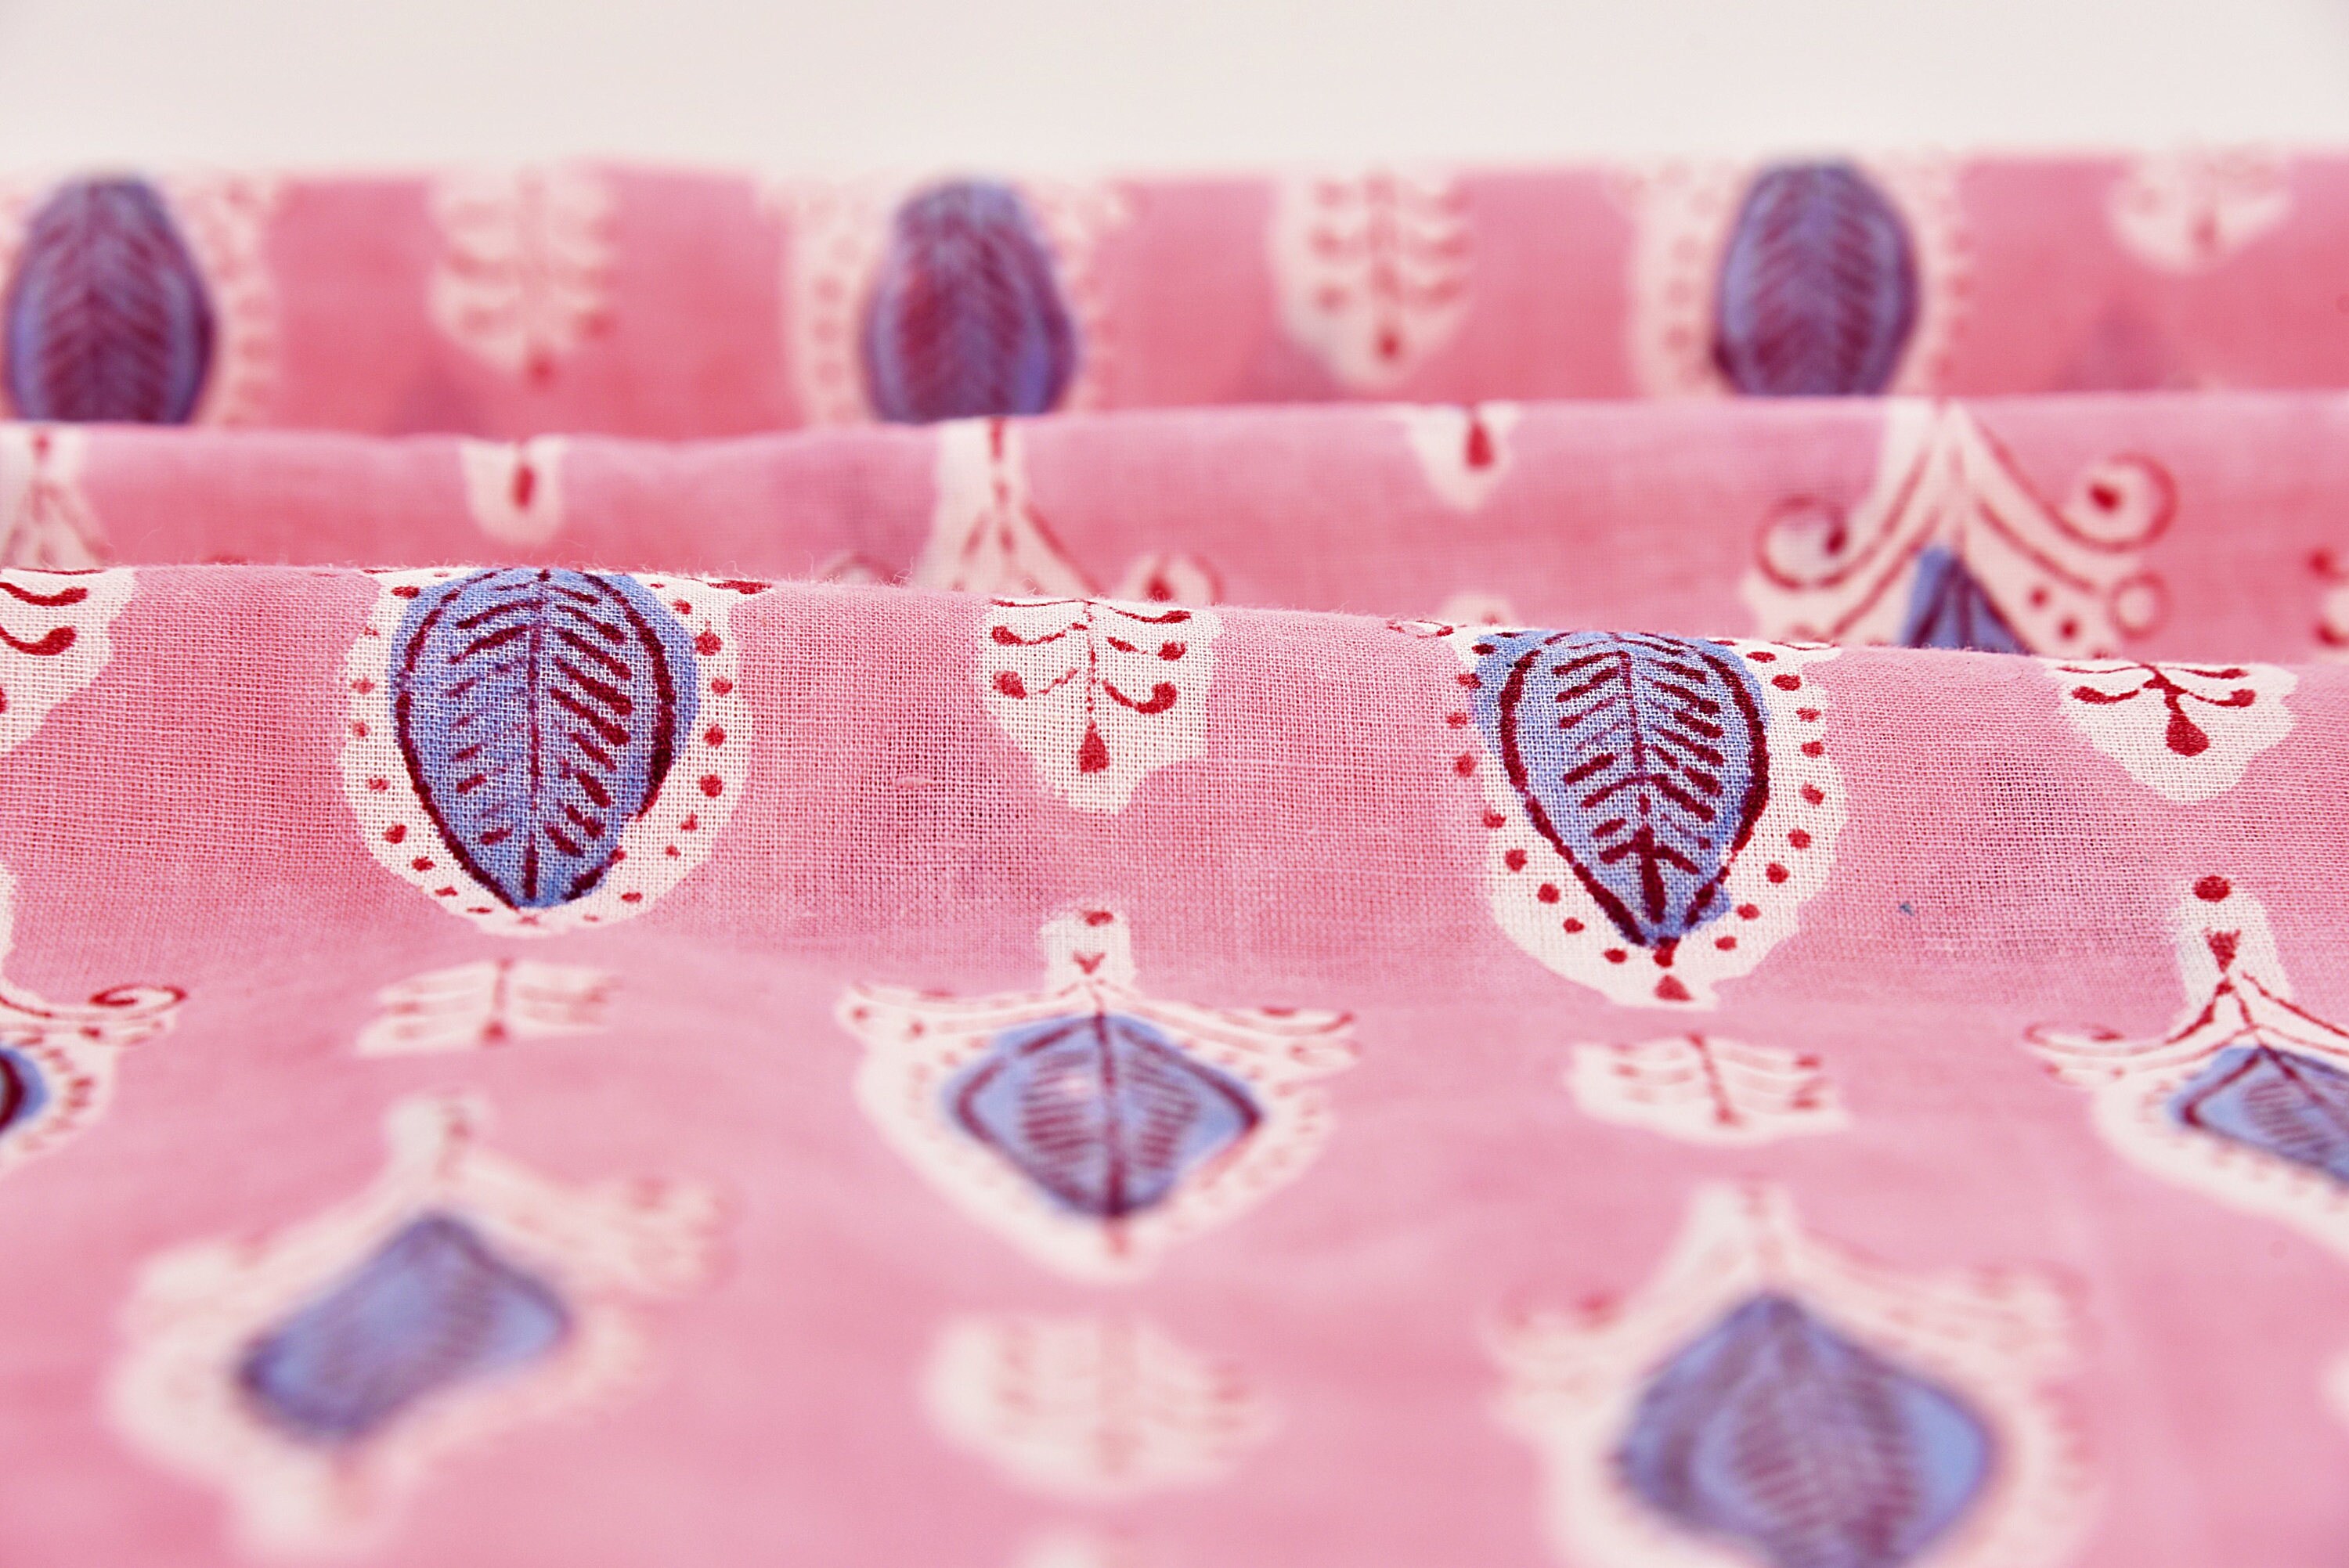  Craftofpinkcity 5 Yard Hand Block Print Fabric Indigo Blue Tyi  Dyed Cotton Dabu Indian Fabric